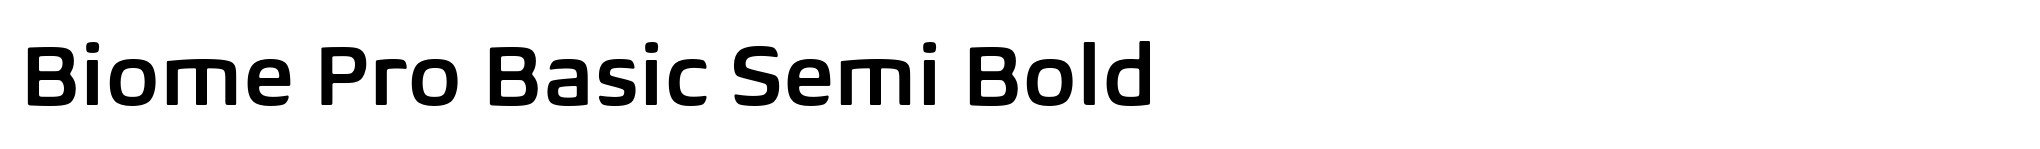 Biome Pro Basic Semi Bold image